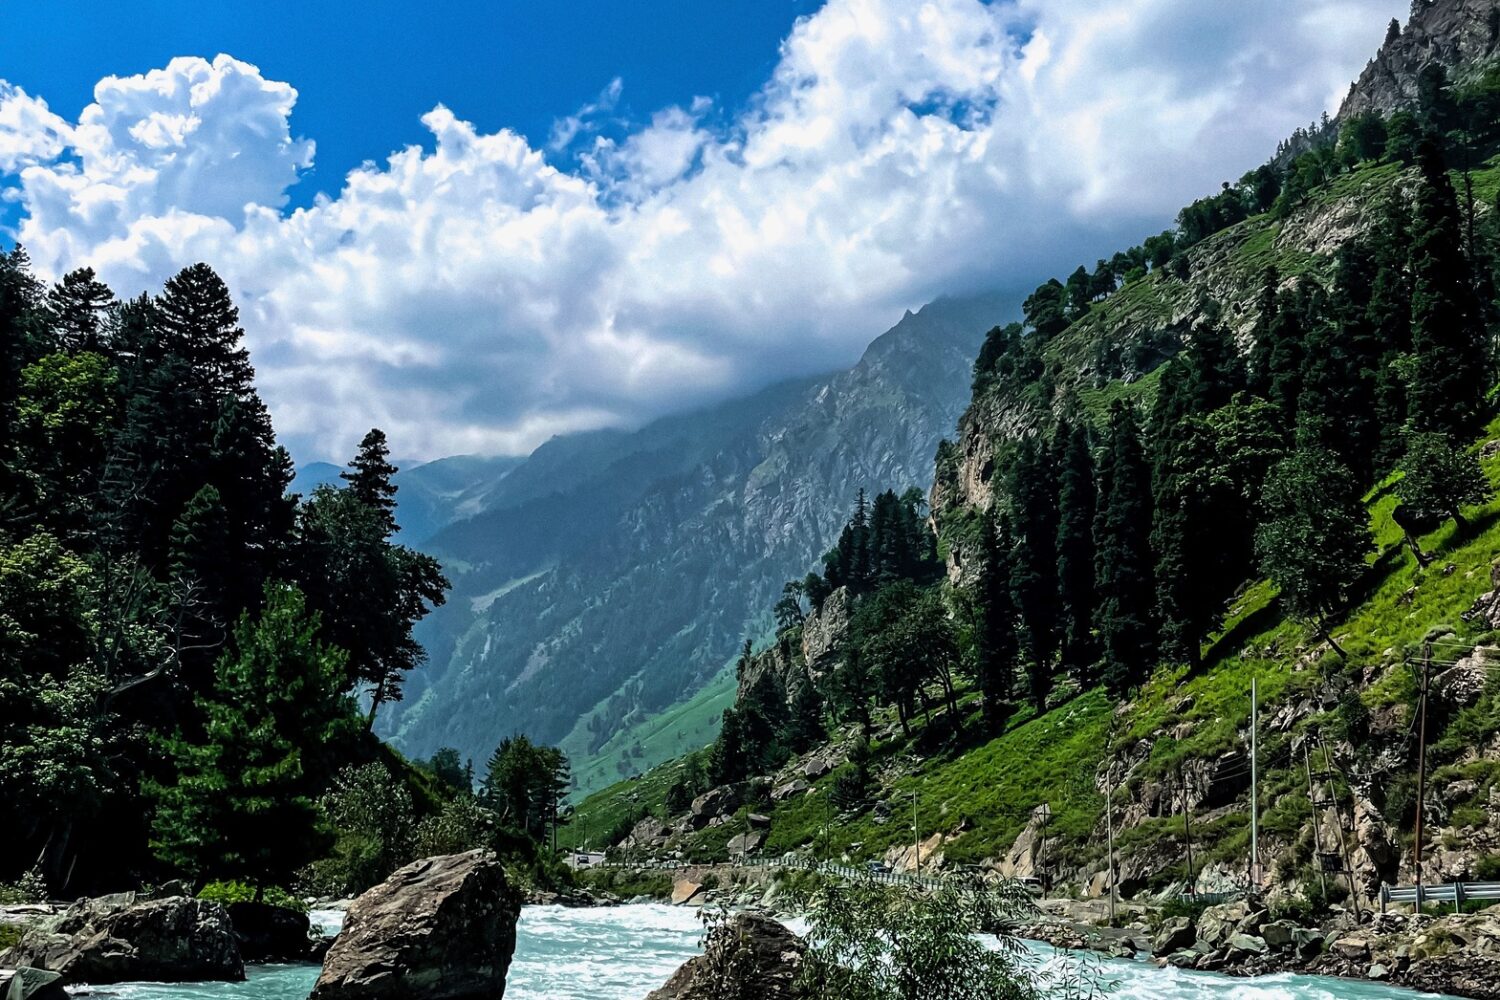 River in Kashmir